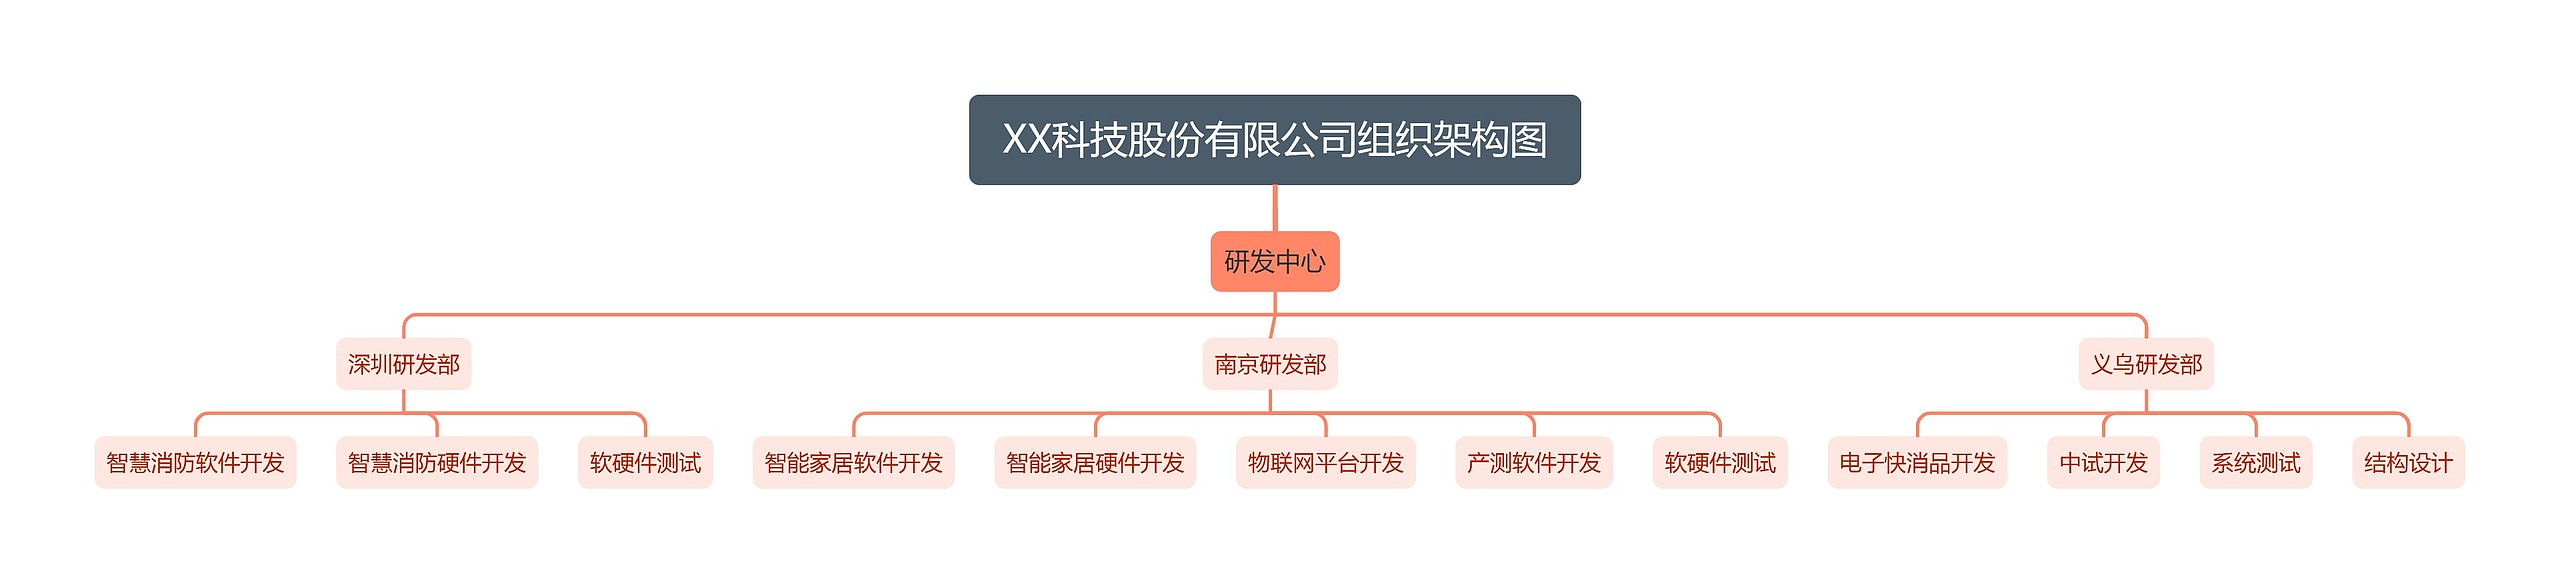 XX科技股份有限公司组织架构图